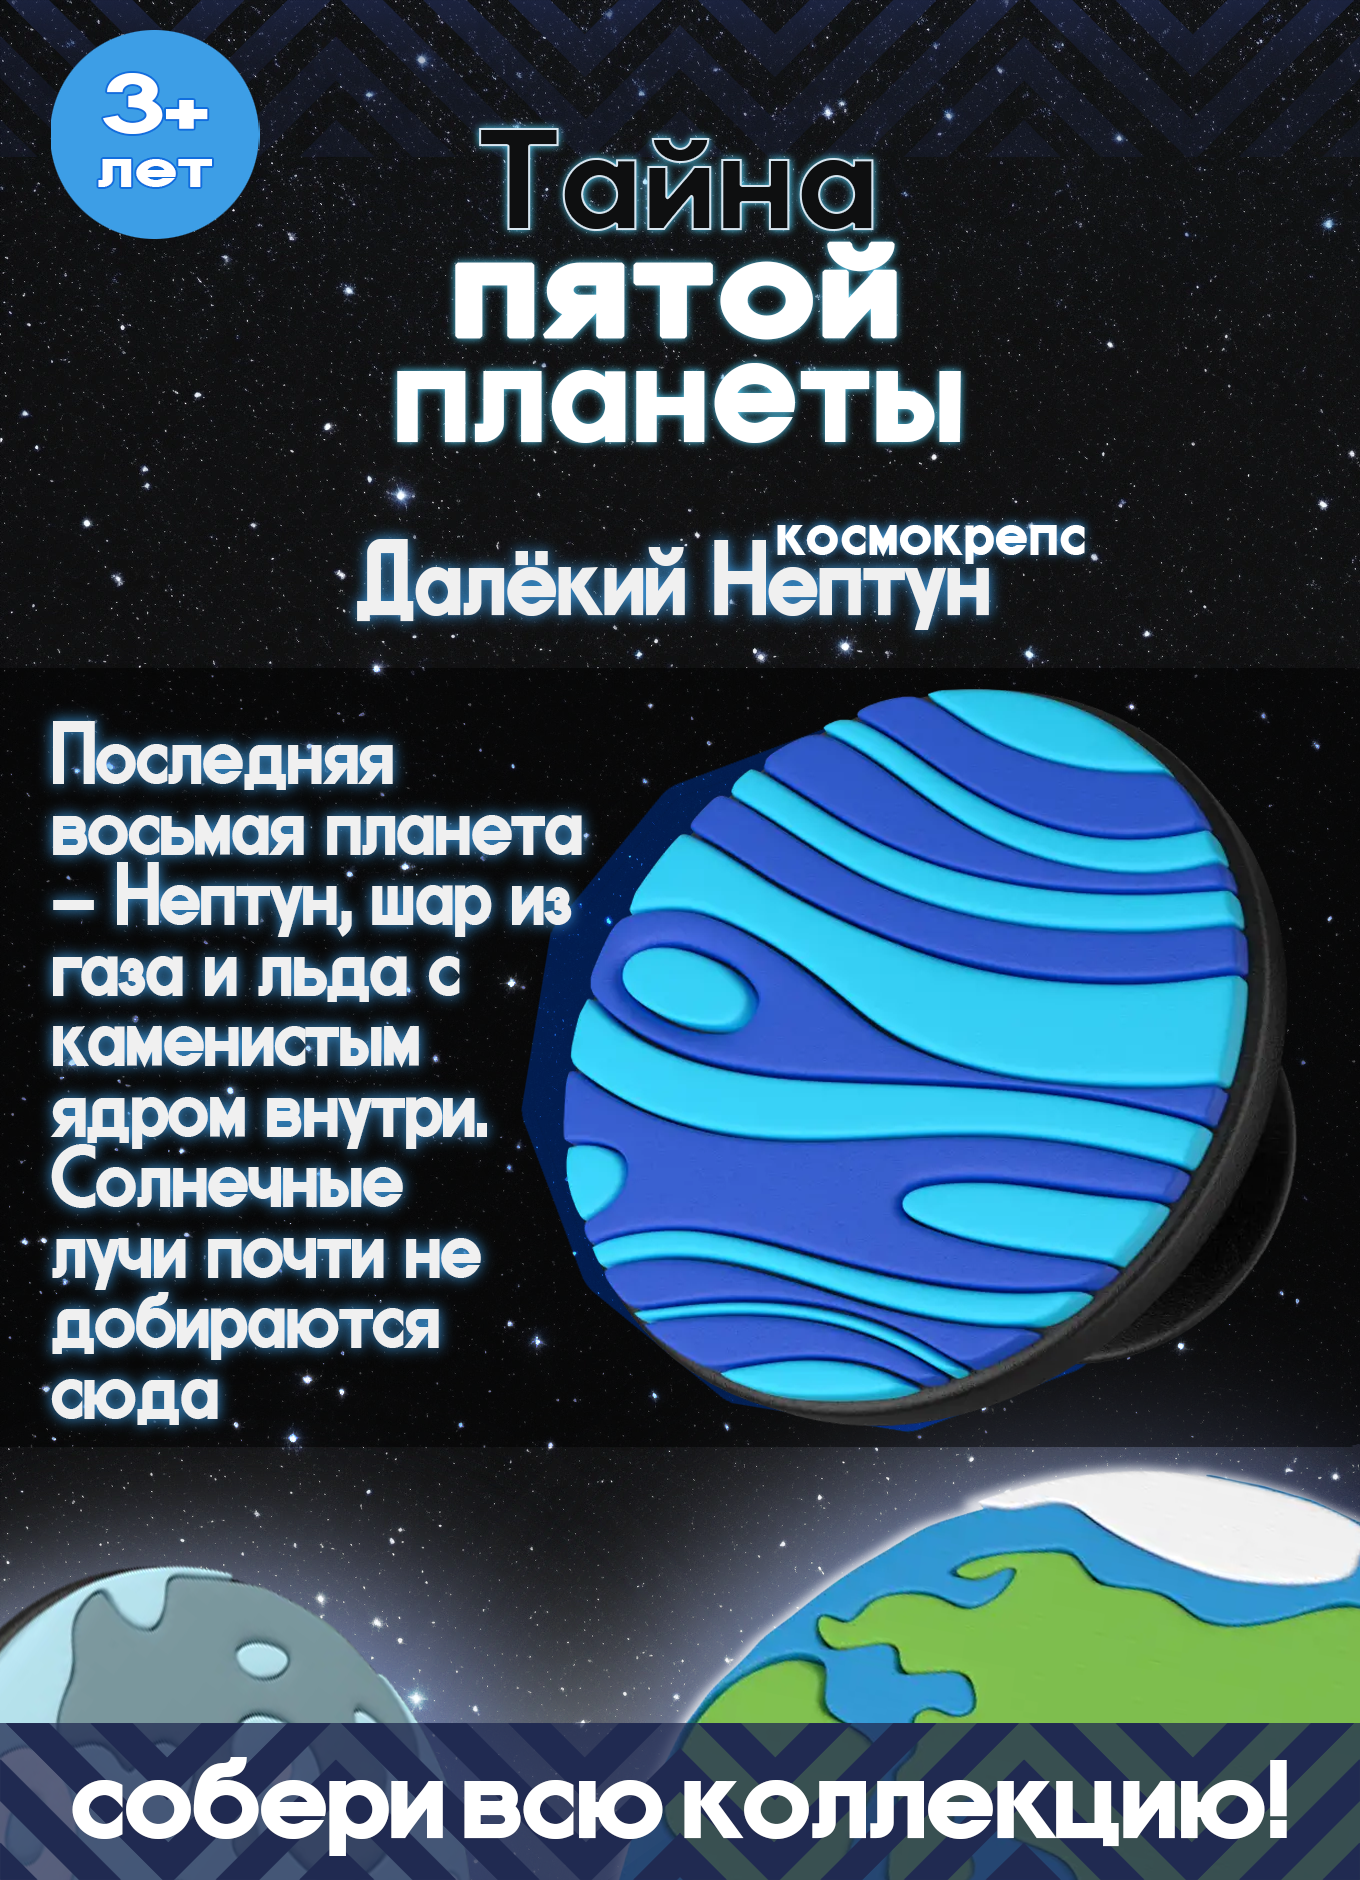 Пятерочка Тайна пятой планеты Космокрепс Далекий Нептун